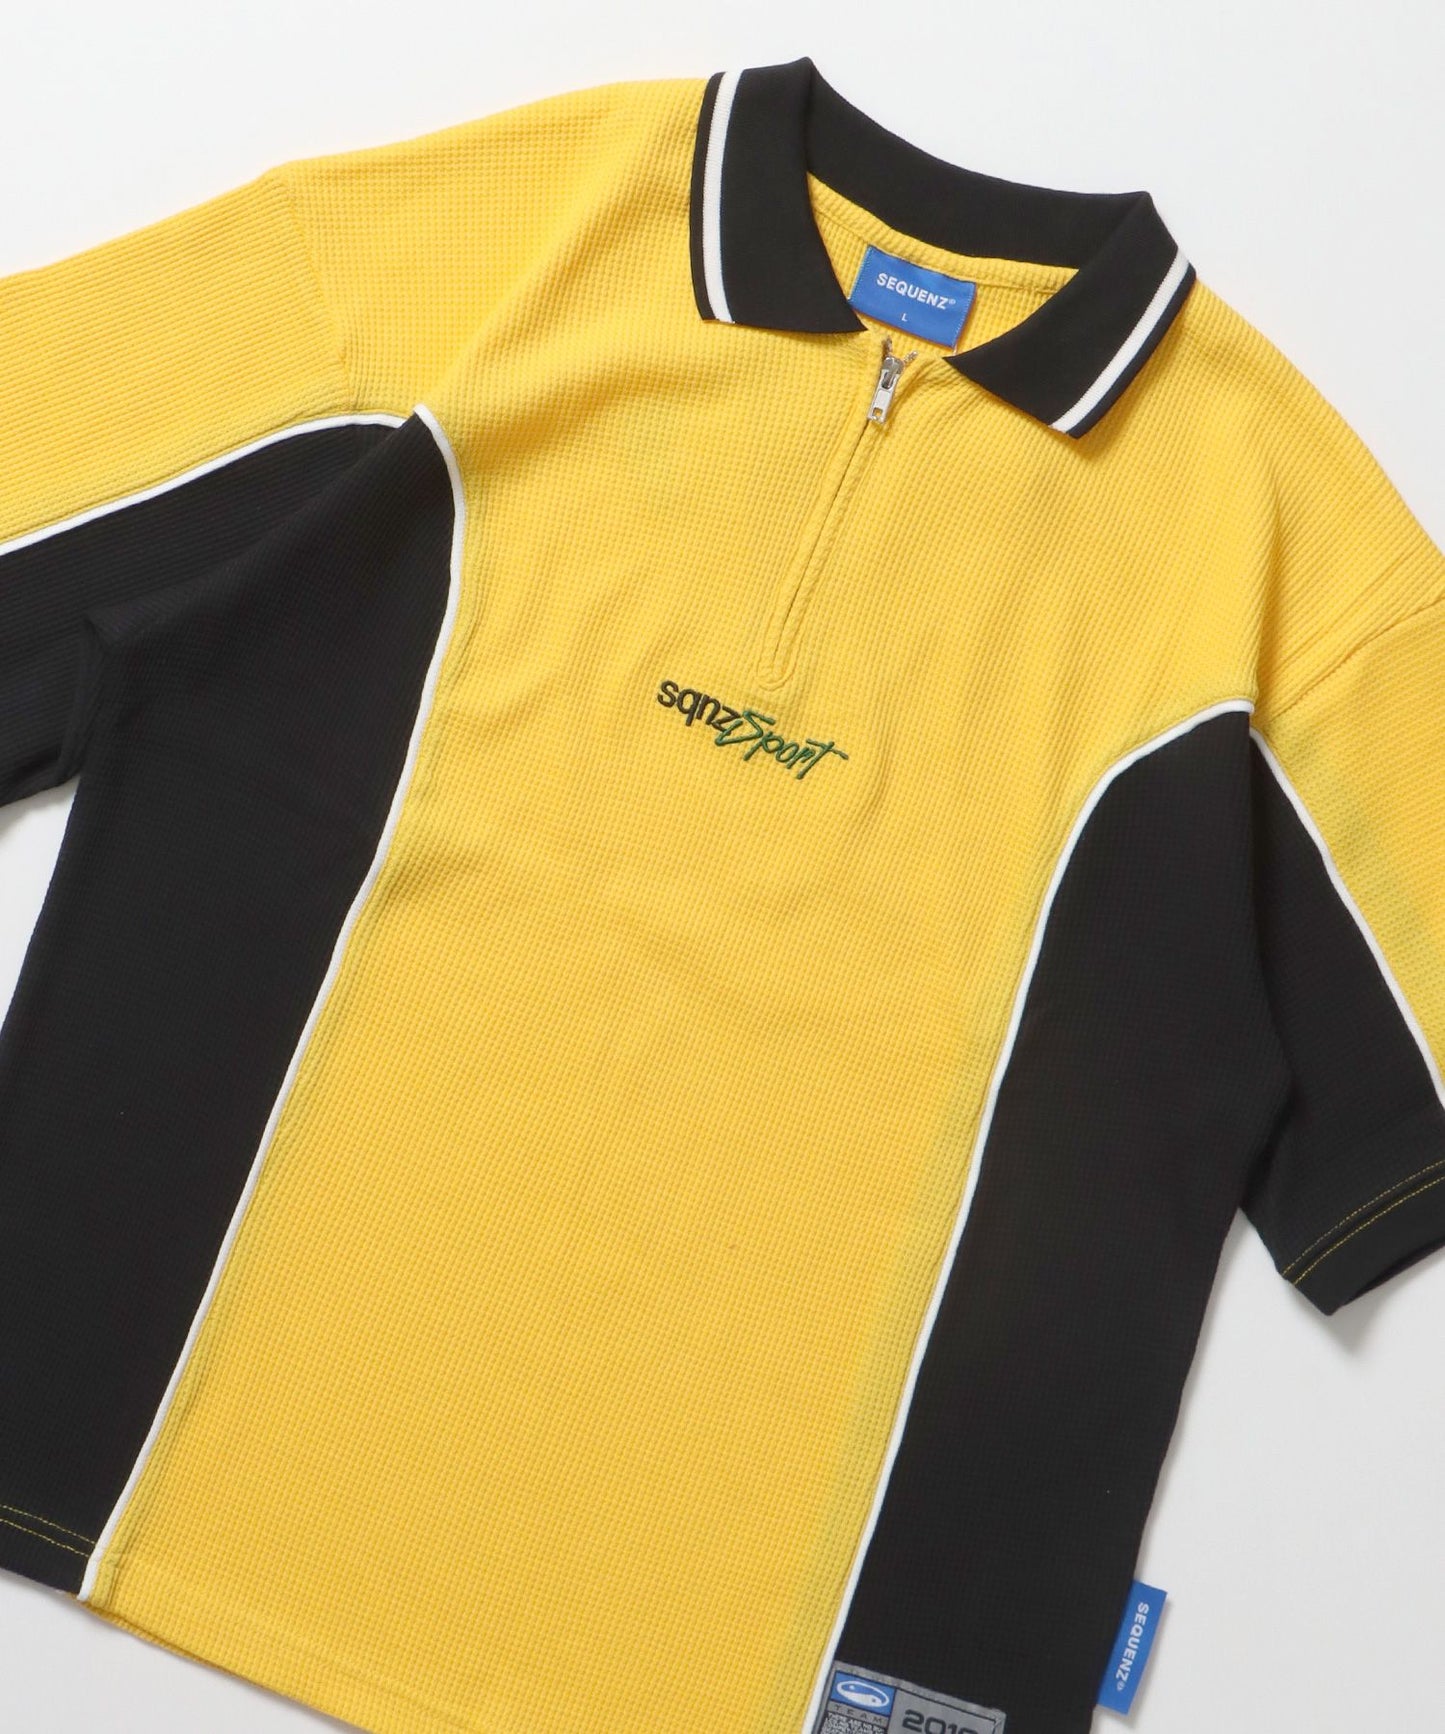 【SEQUENZ】SQNZ SPORT ZIP POLO S/S THERMAL / 衿付き ポロシャツ 配色 パイピング ブランドロゴ ワンポイント ハーフジップ スポーティー Tシャツ ゲームシャツ 襟ライン イエロー